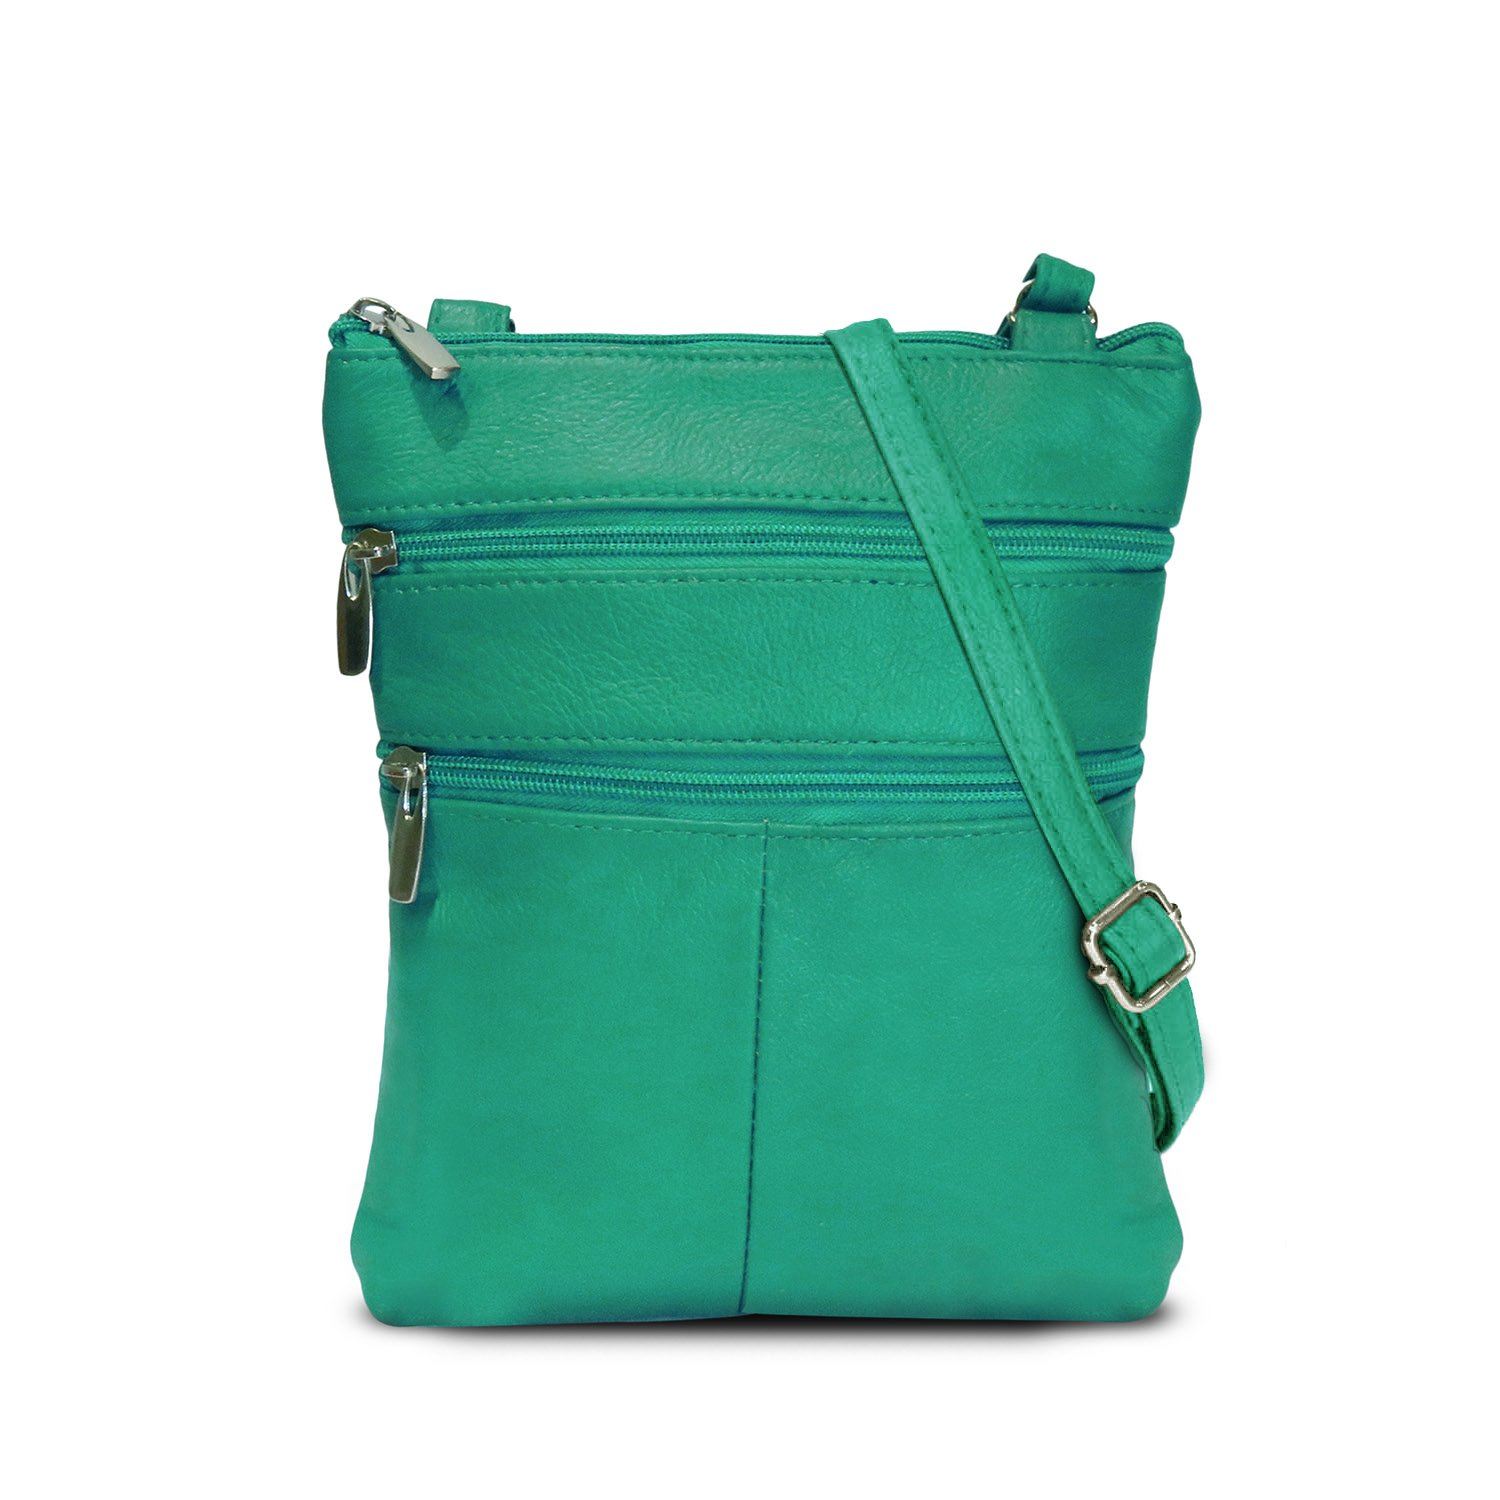 Handbag for Women Bag Women's Genuine Leather Bags Handbags Crossbody Bags for Women Shoulder Bags Genuine Leather Green